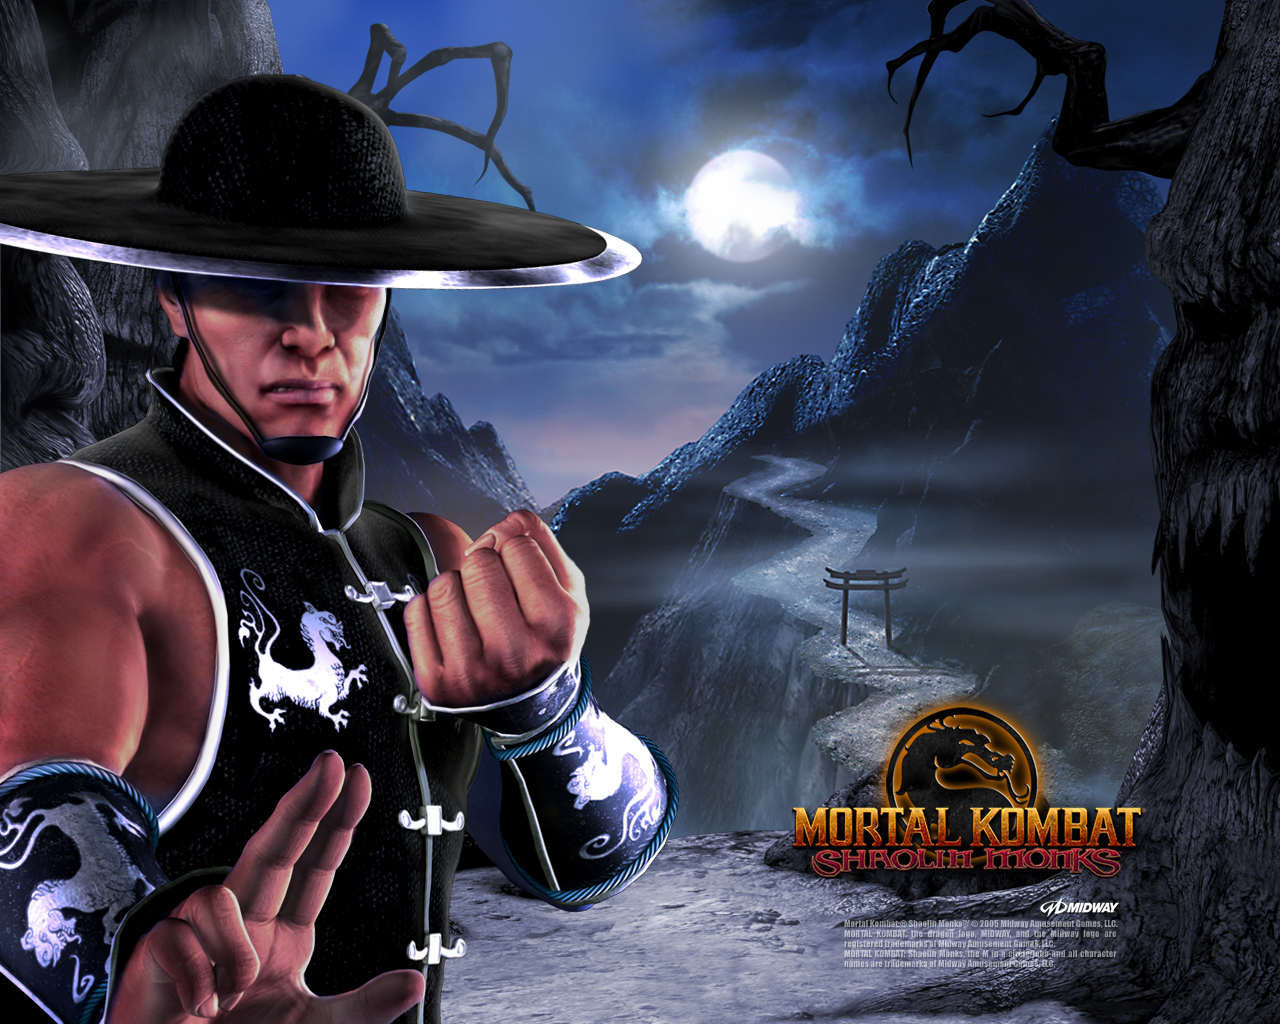 Download High quality Mortal Kombat wallpaper / Games / 1280x1024